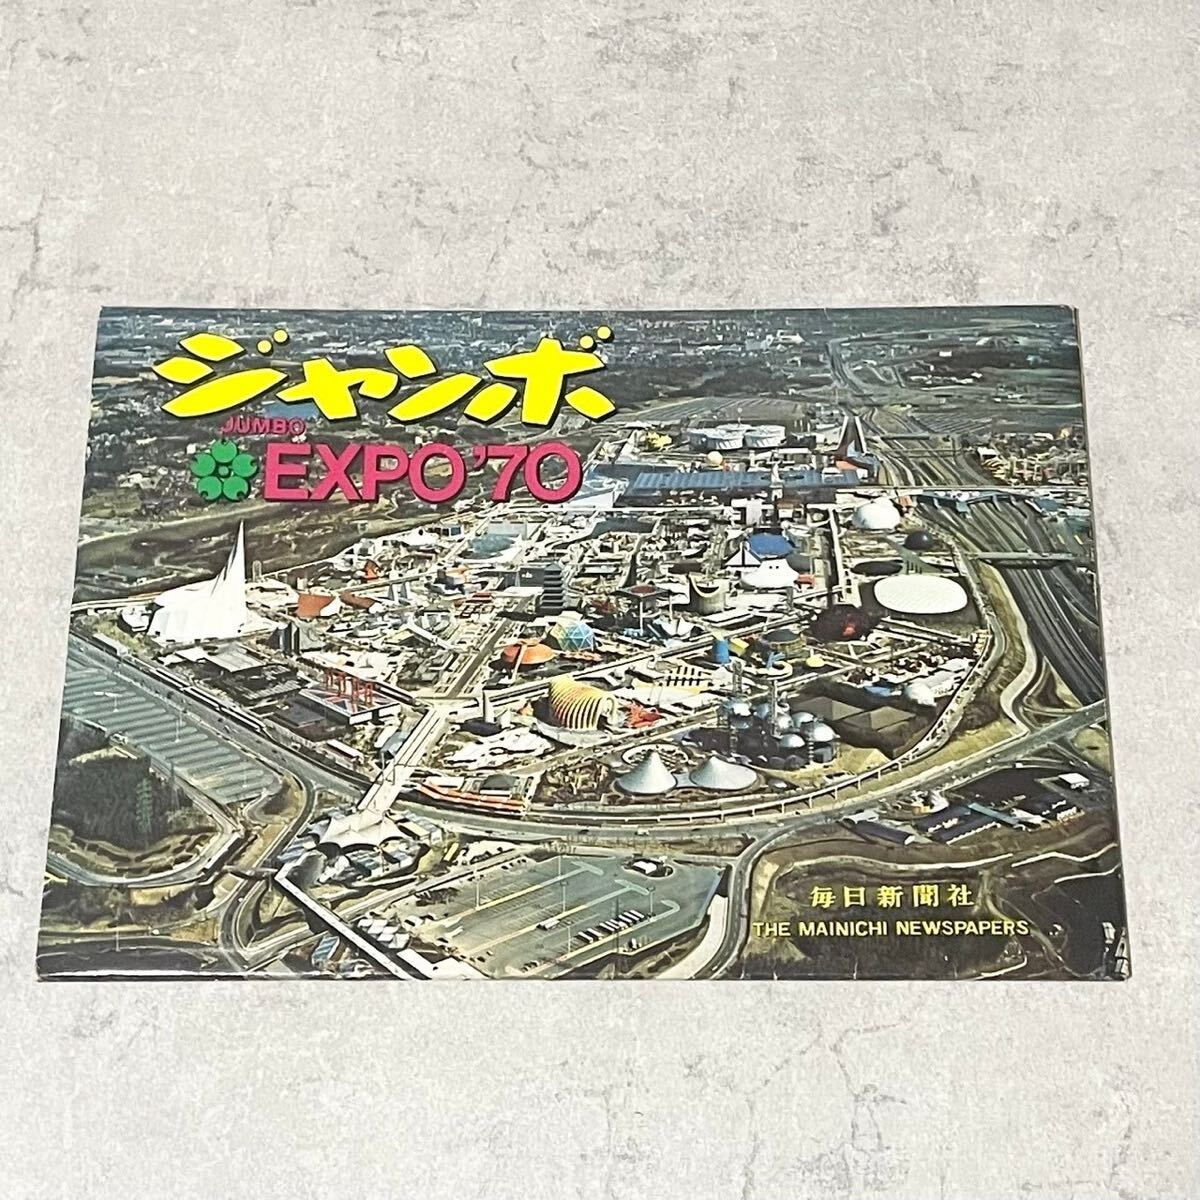 【S1383】 ジャンボ EXPO'70 毎日新聞 日本万国博覧会 写真帳 大阪万博 JUMBOの画像1